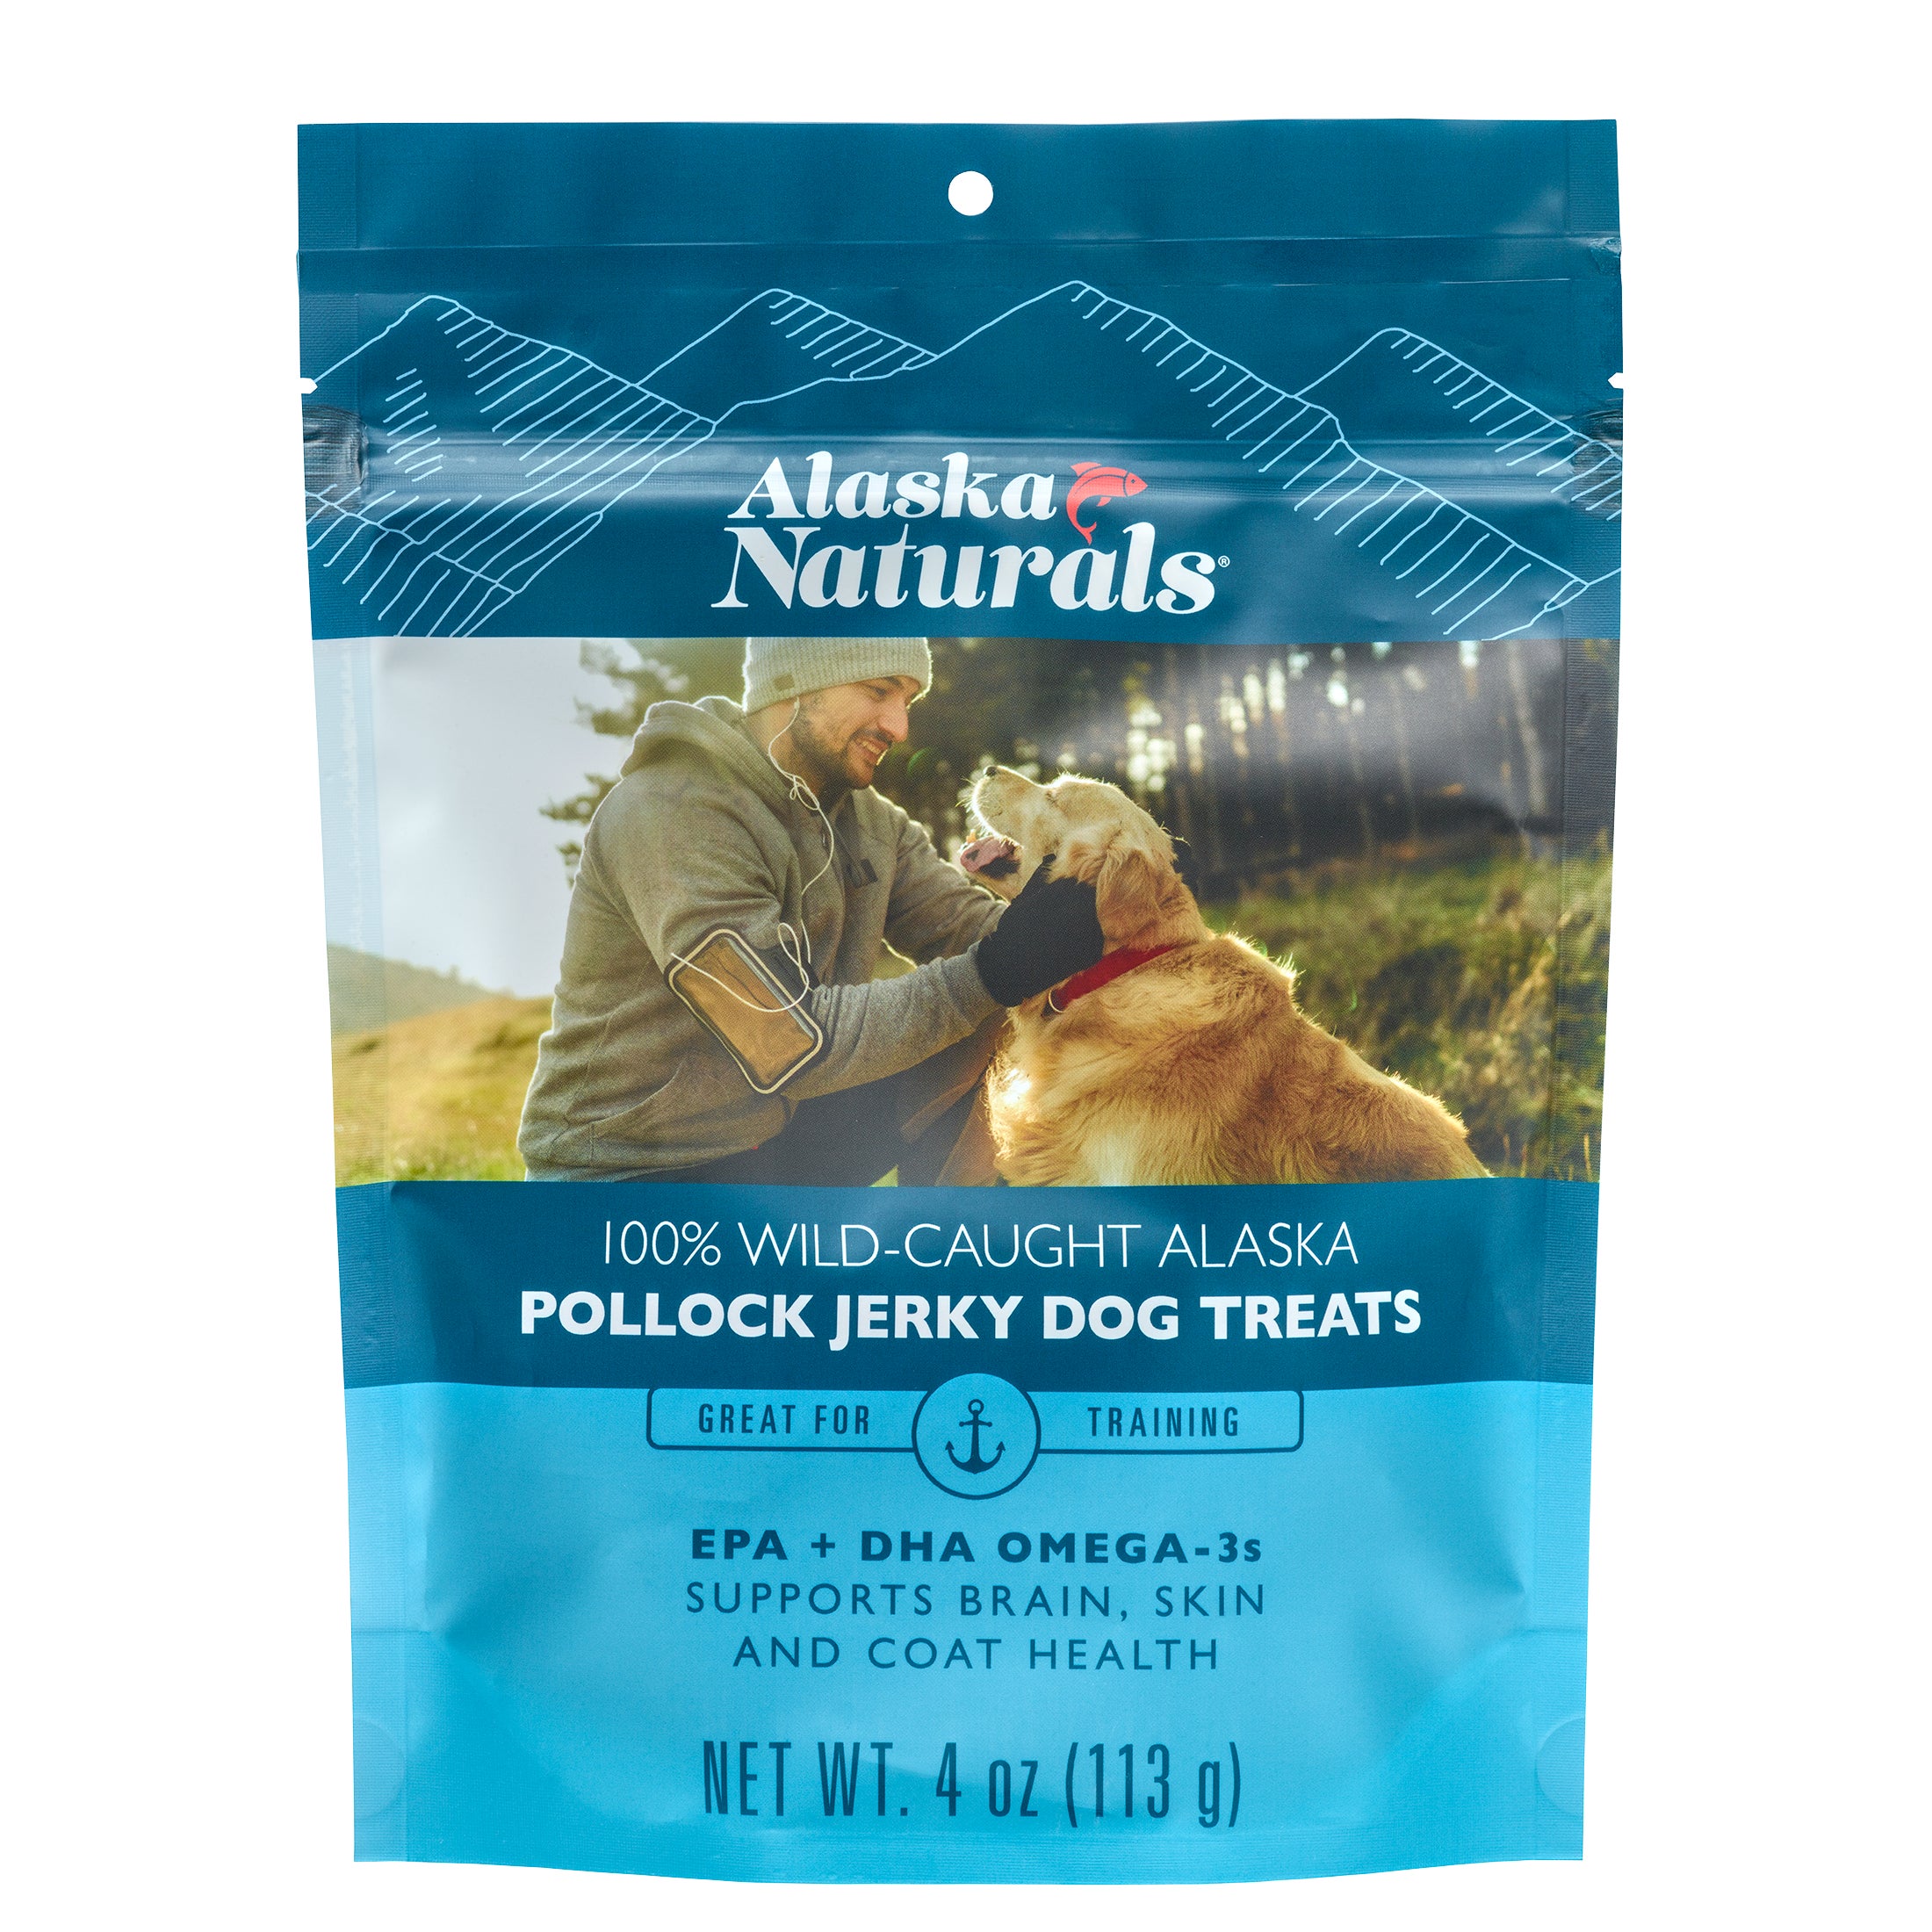 Wild-Caught Alaska Pollock Jerky Dog Treats slide 0